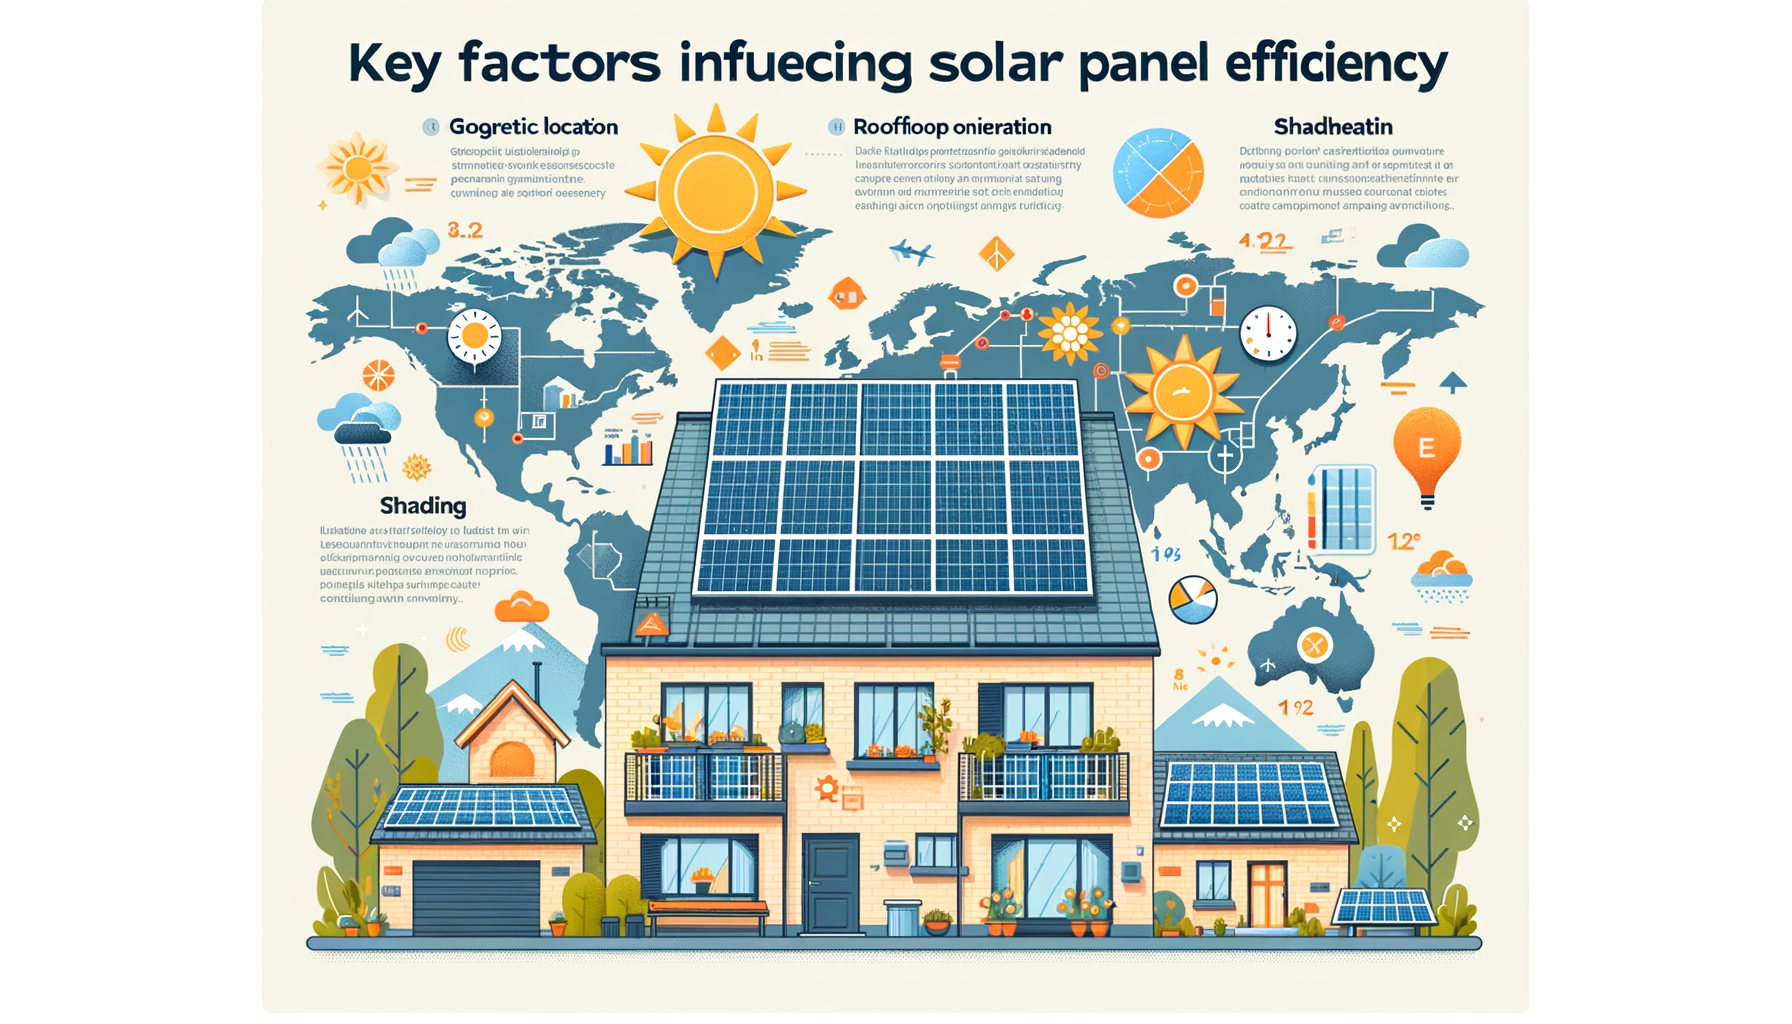 ALT: Factors affecting solar panel efficiency infographic